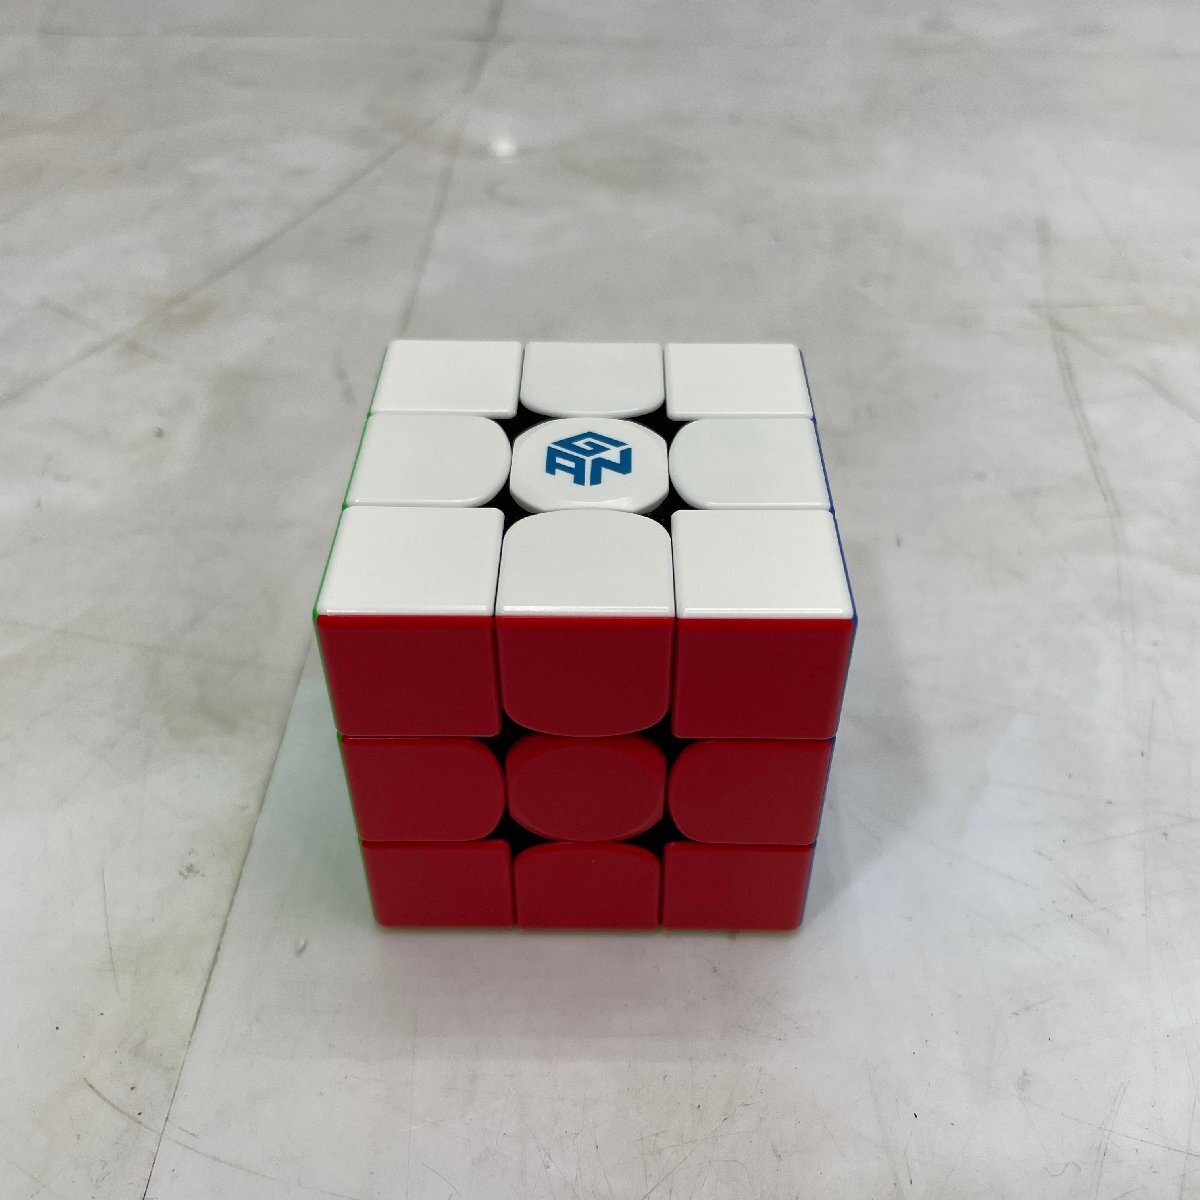 ♭R♭ 美品 GAN 356M スピードキューブ ルービックキューブ 中古品 競技用 磁石搭載 脳トレ 知育玩具 立体パズル ♭J-240542_画像2